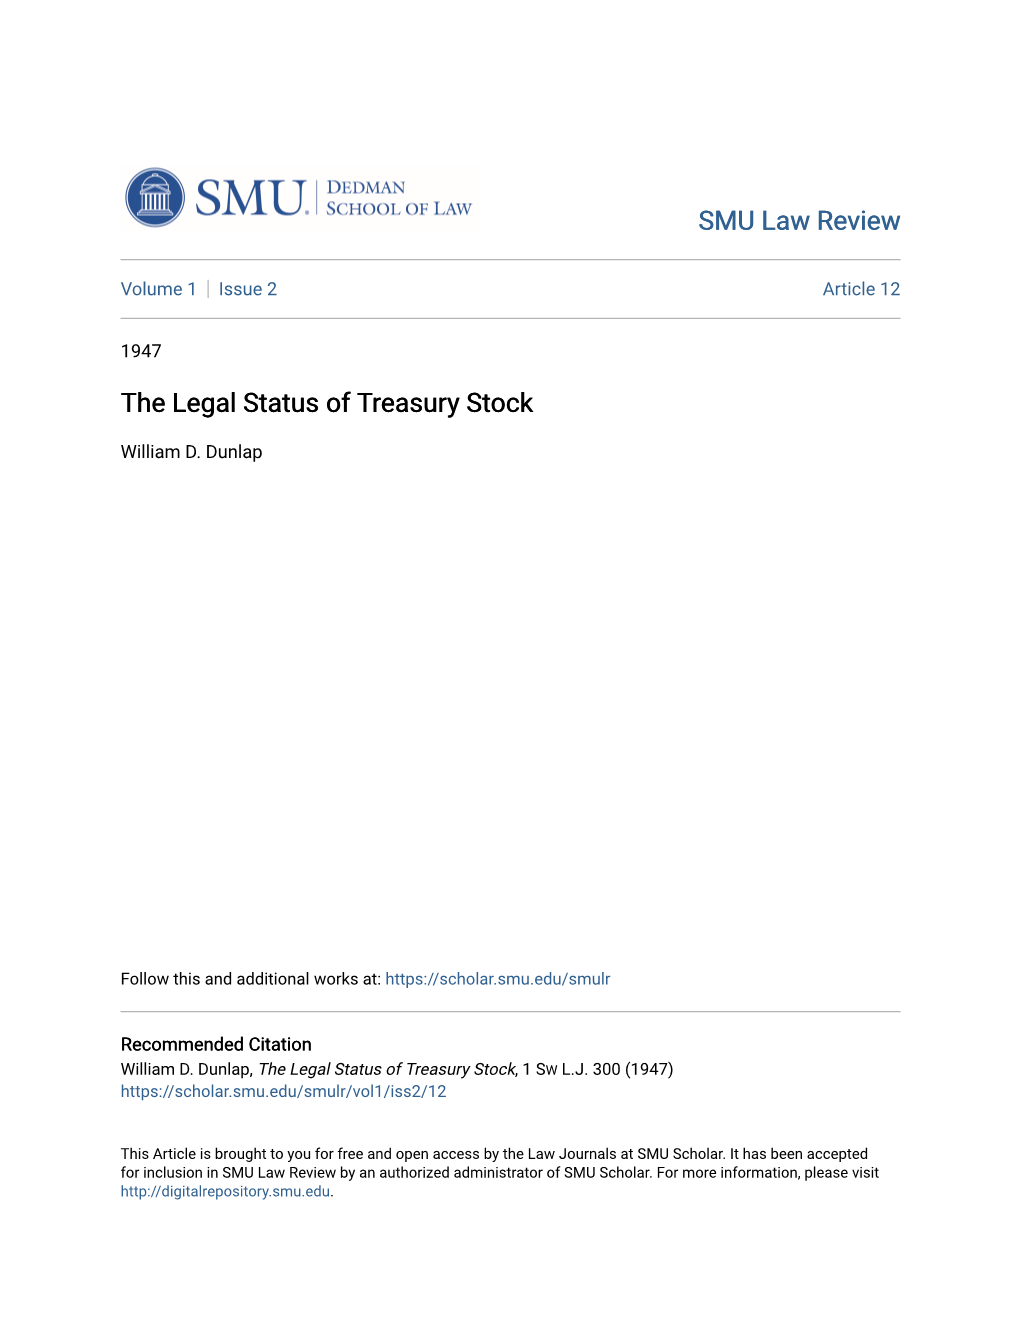 The Legal Status of Treasury Stock